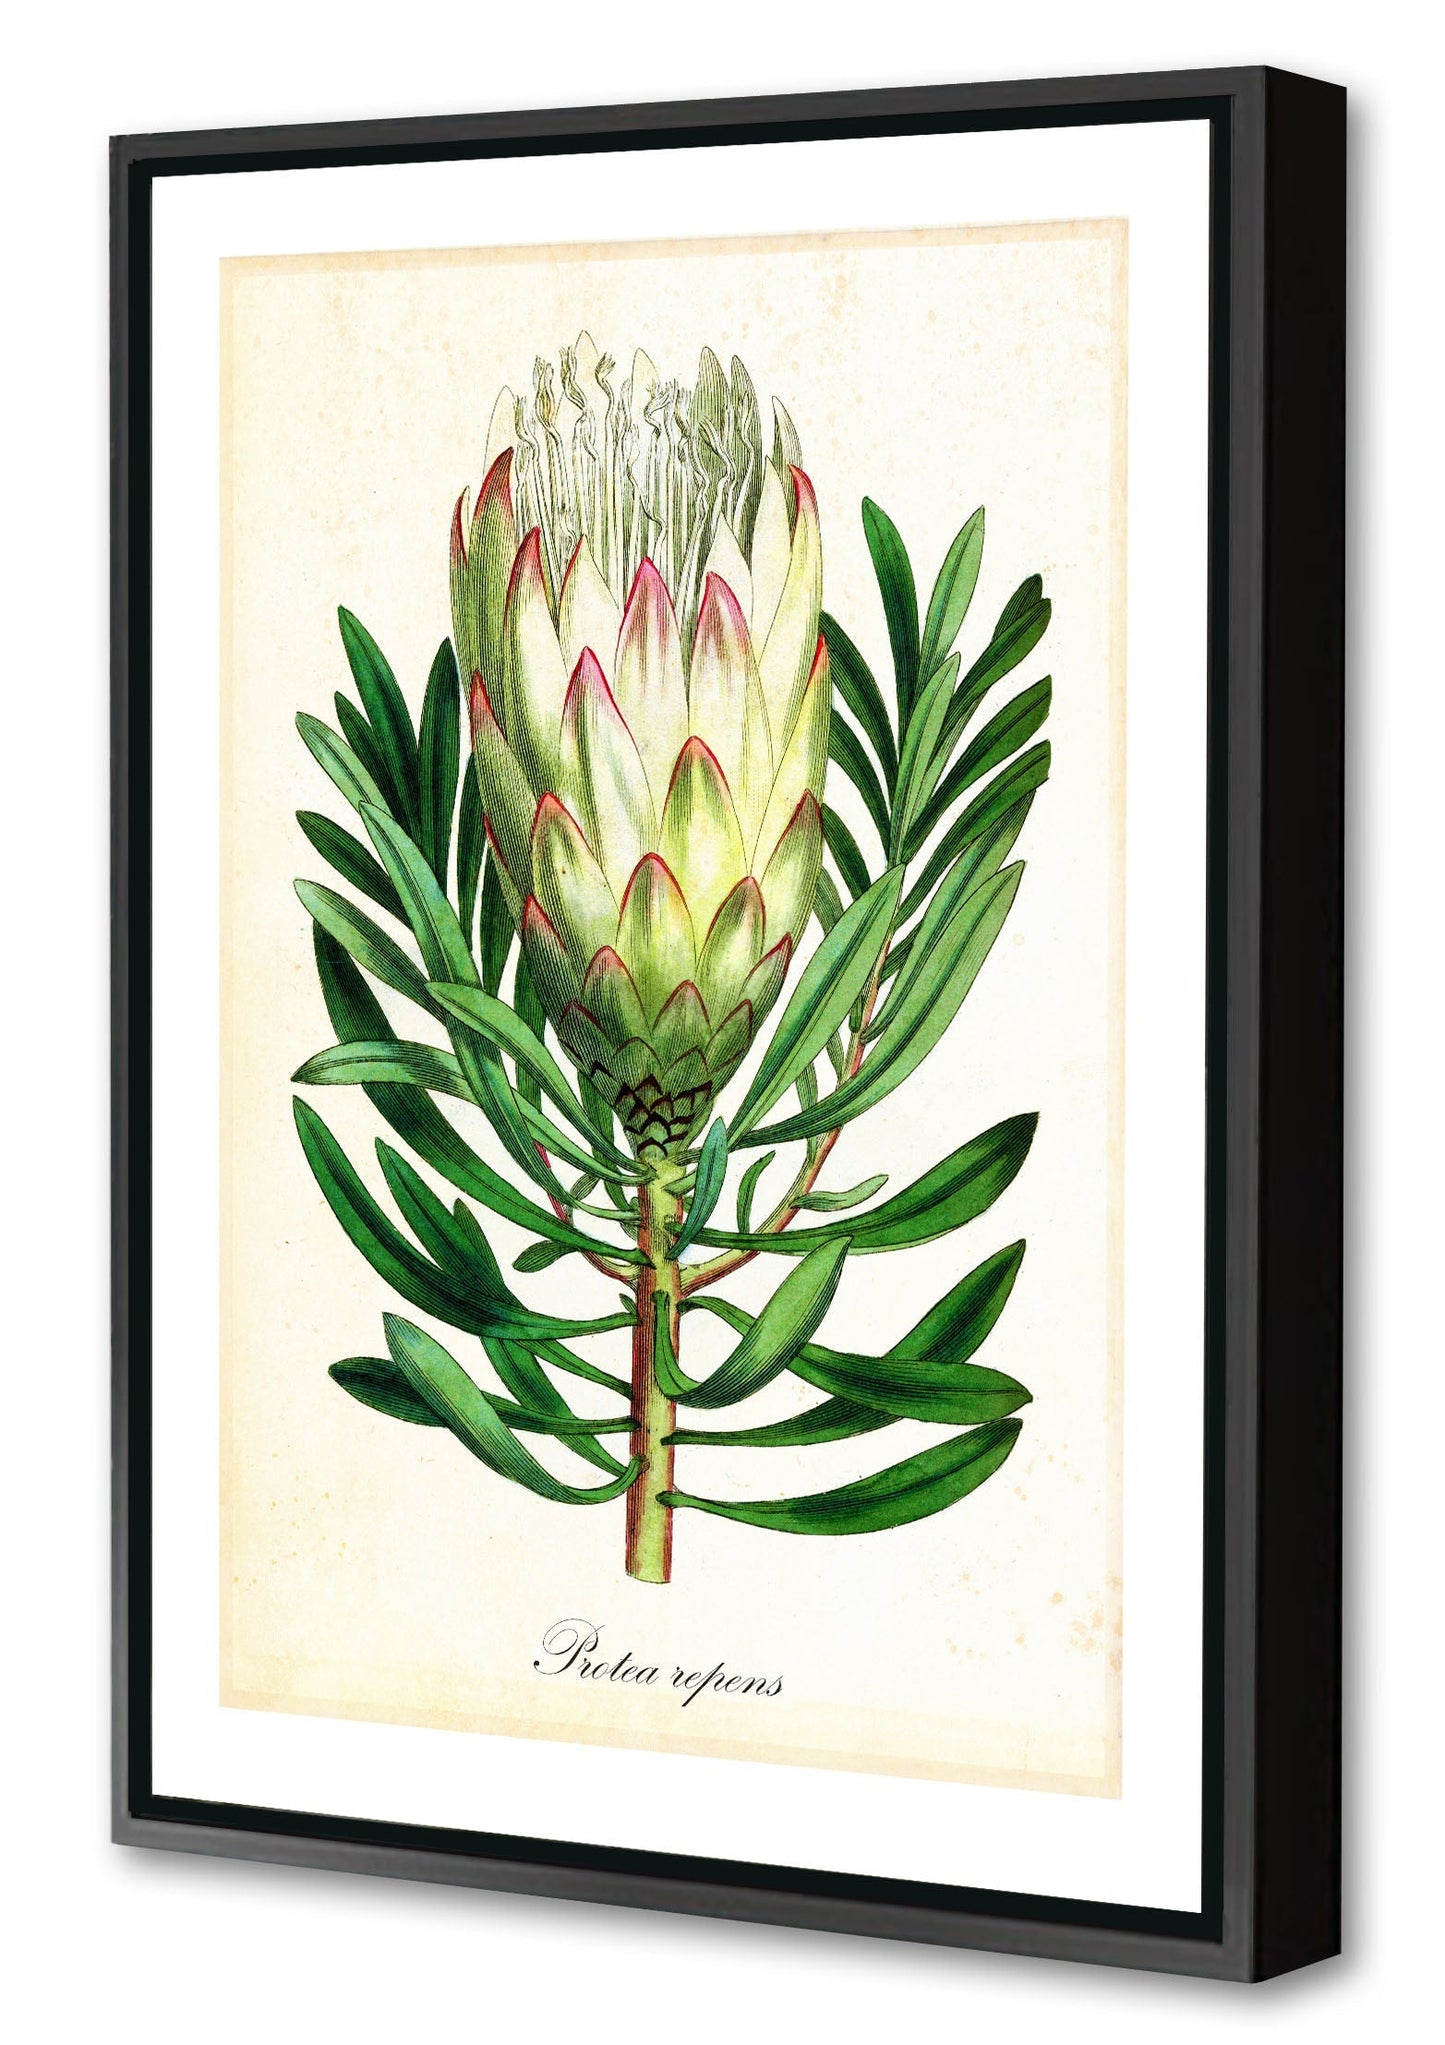 Pl Protearepens-botanical, print-Canvas Print with Box Frame-40 x 60 cm-BLUE SHAKER